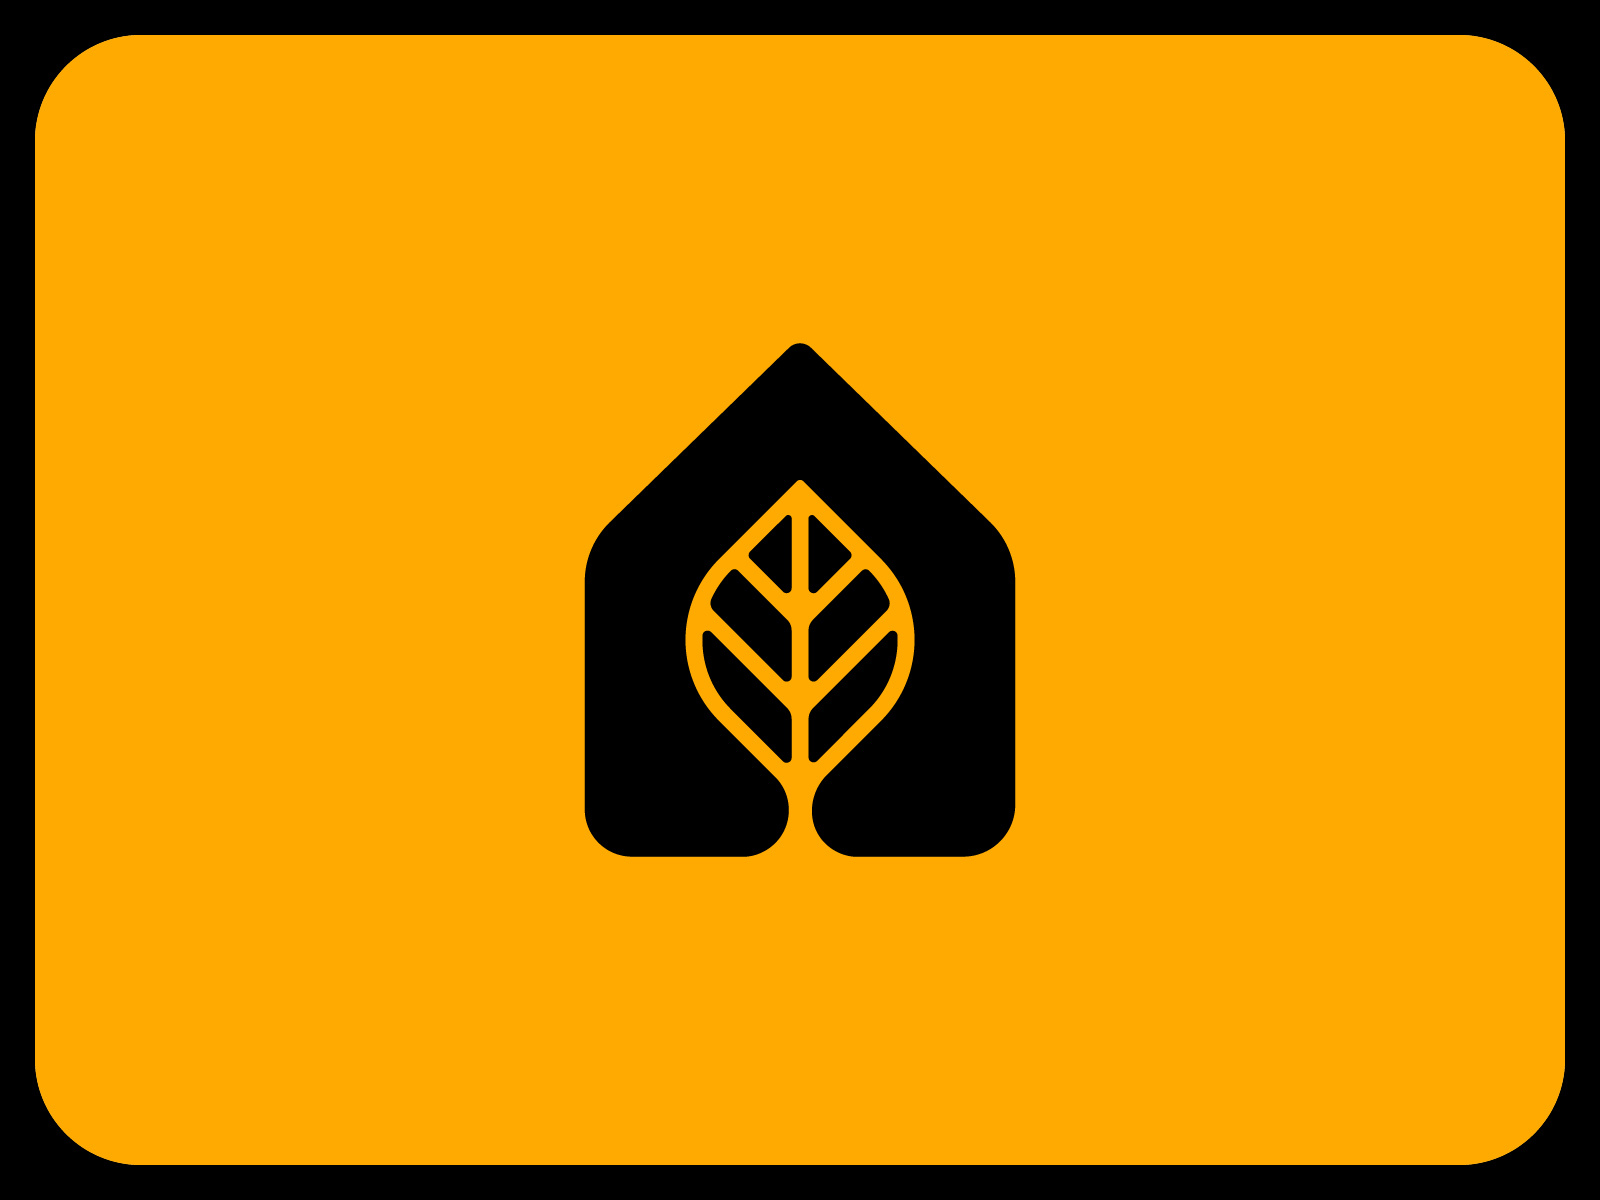 Modern House & Leaf Logo by Jeremiah Baughman on Dribbble